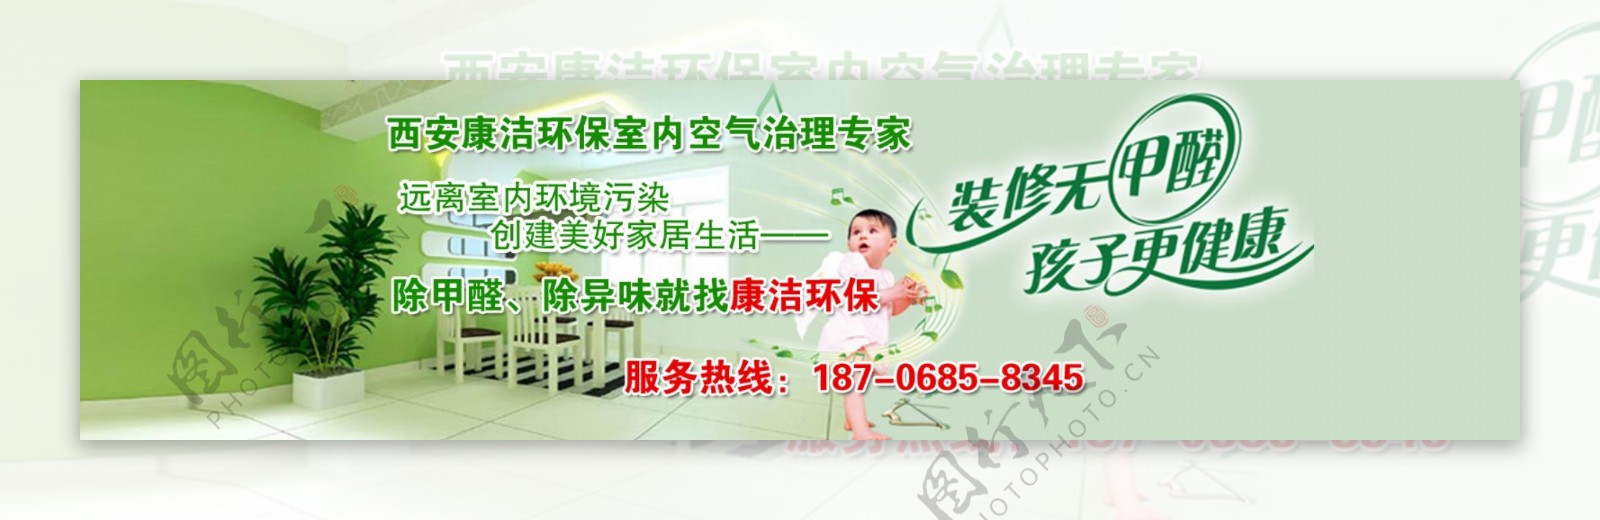 环保绿色网站banner图